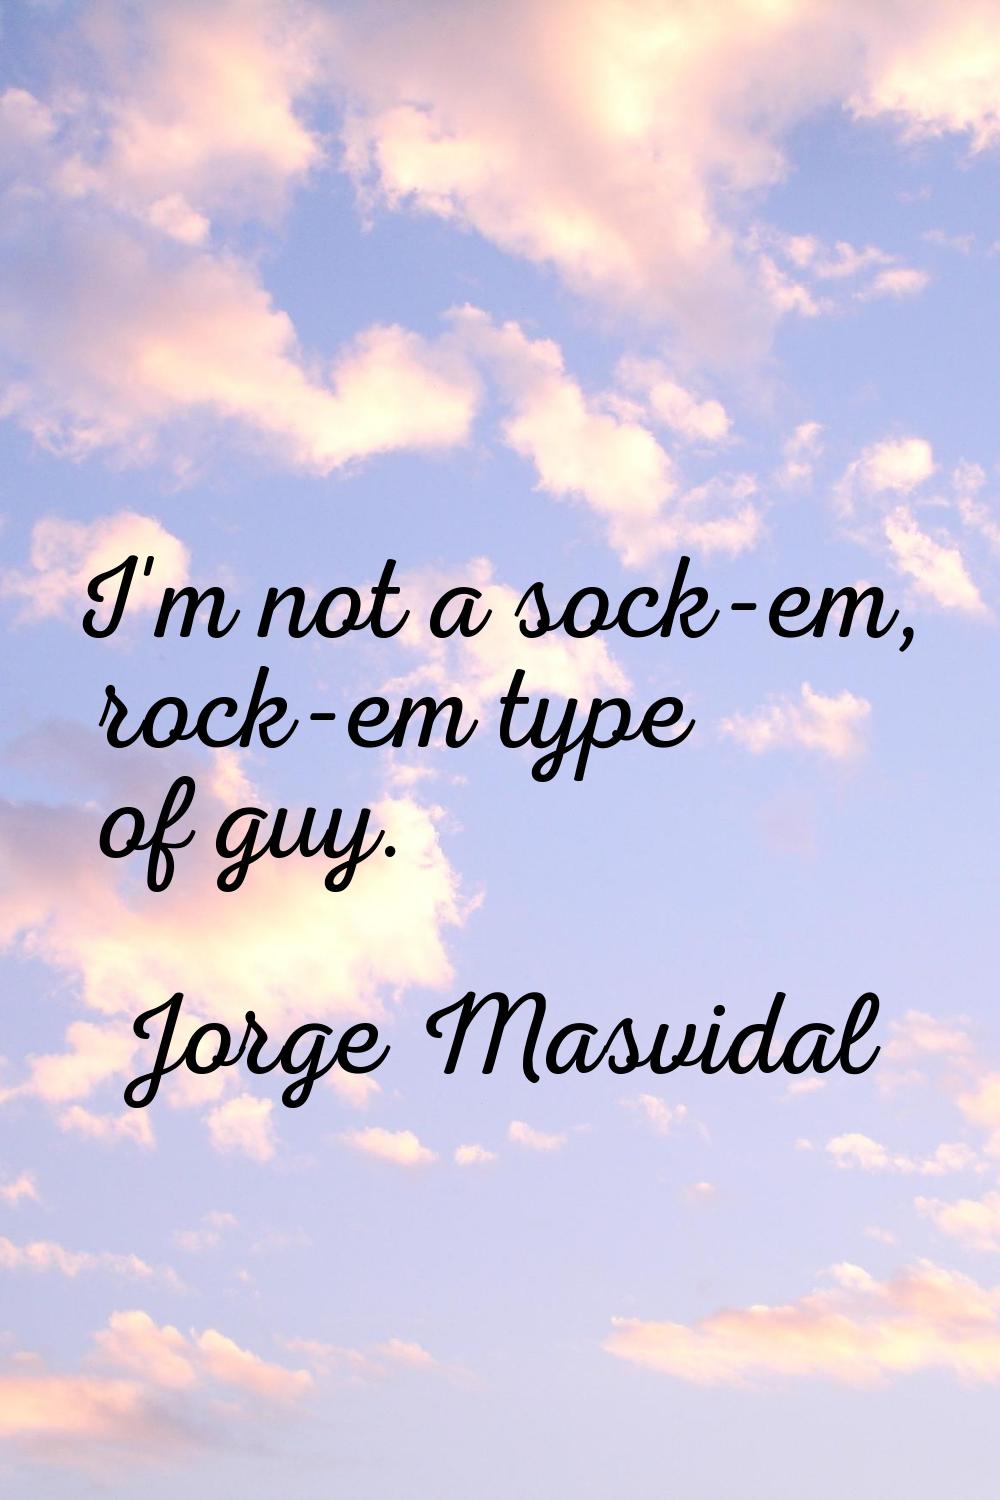 I'm not a sock-em, rock-em type of guy.